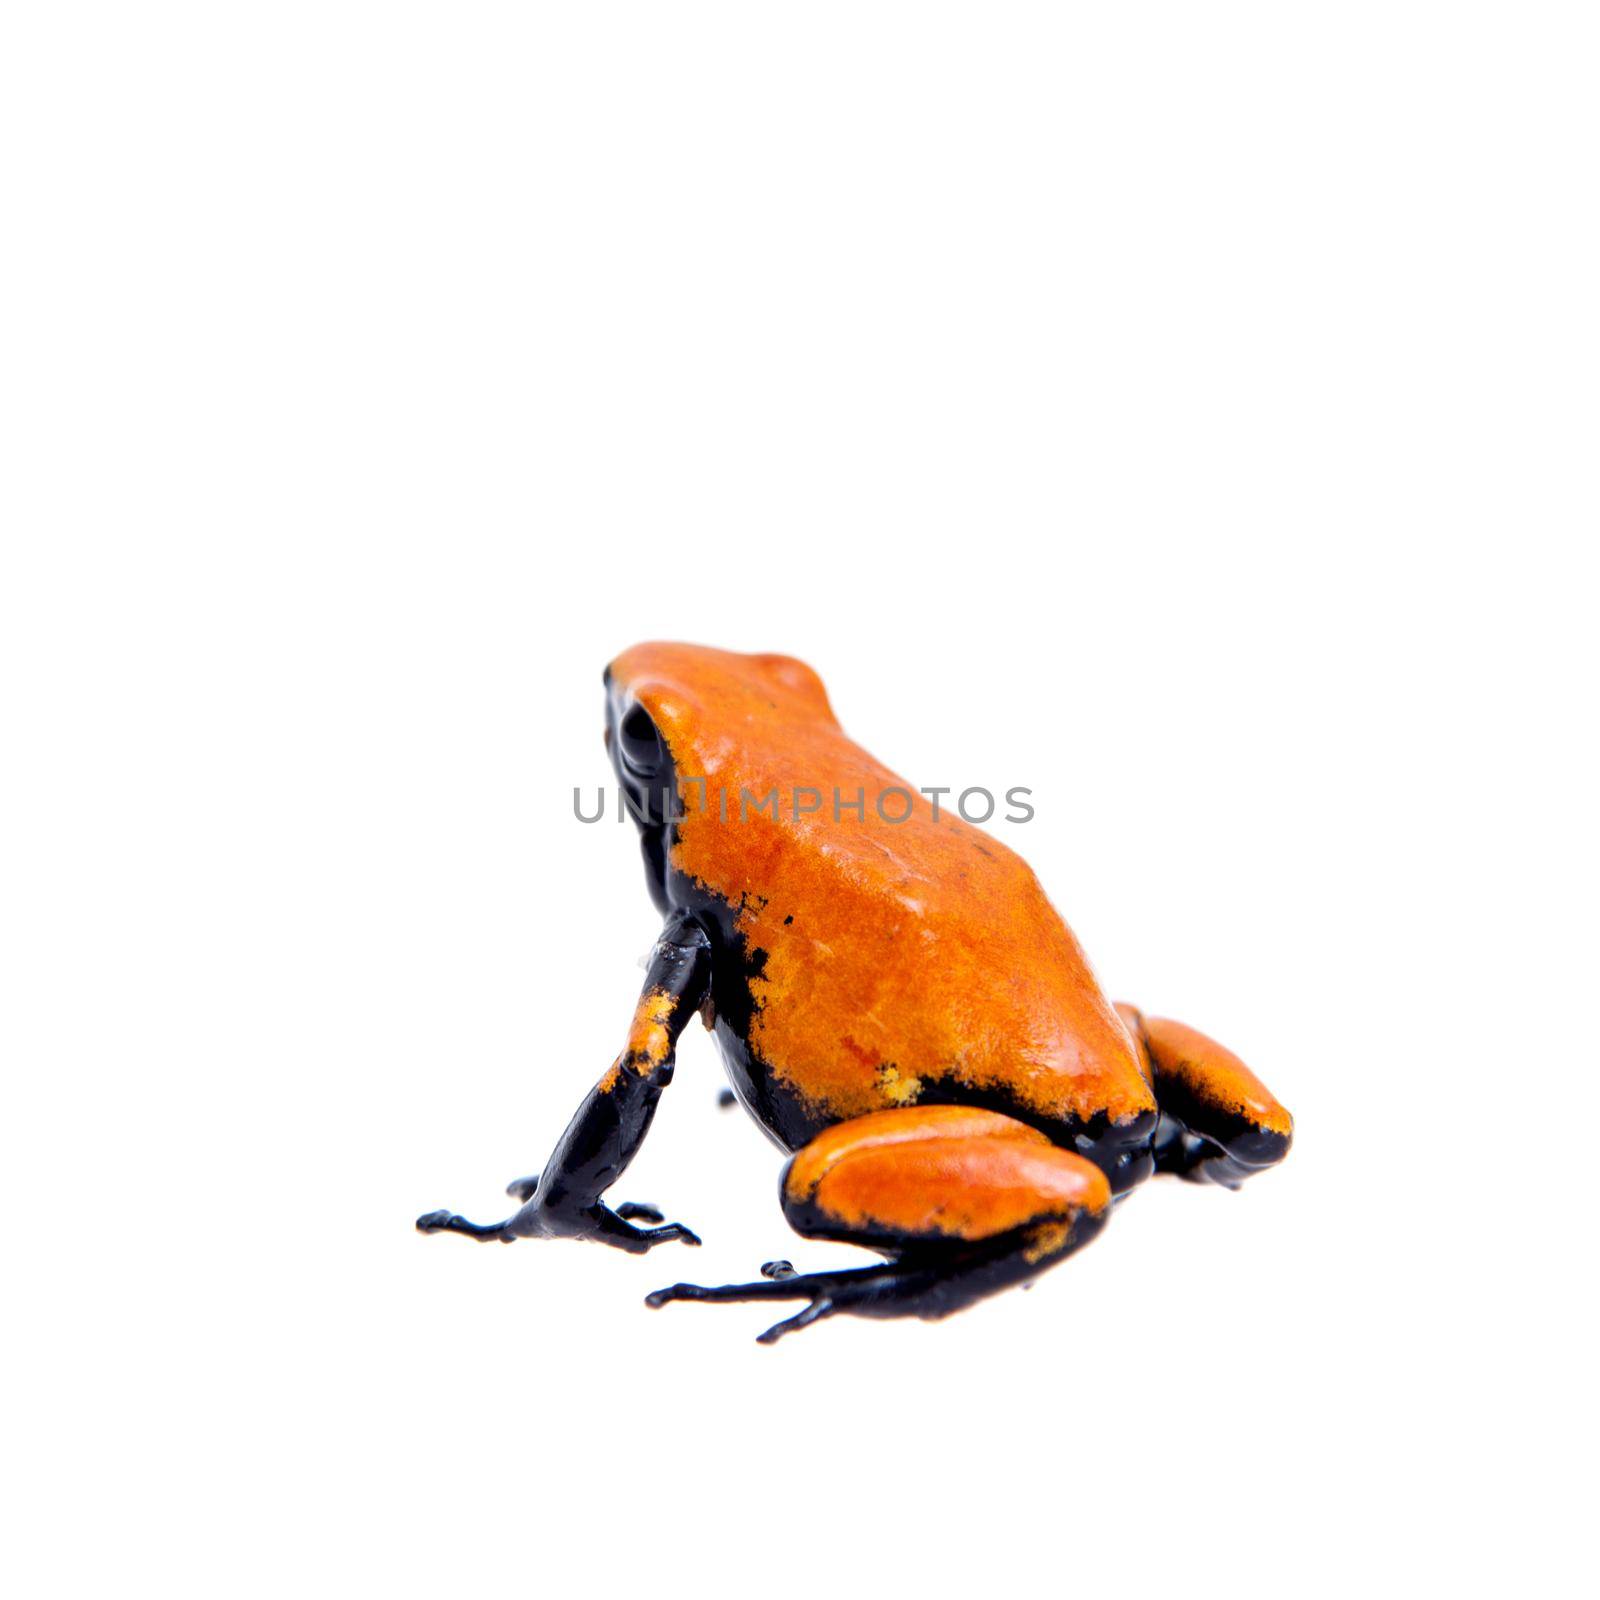 Splash-backed poison frog red-backed variant on white backgorund by RosaJay